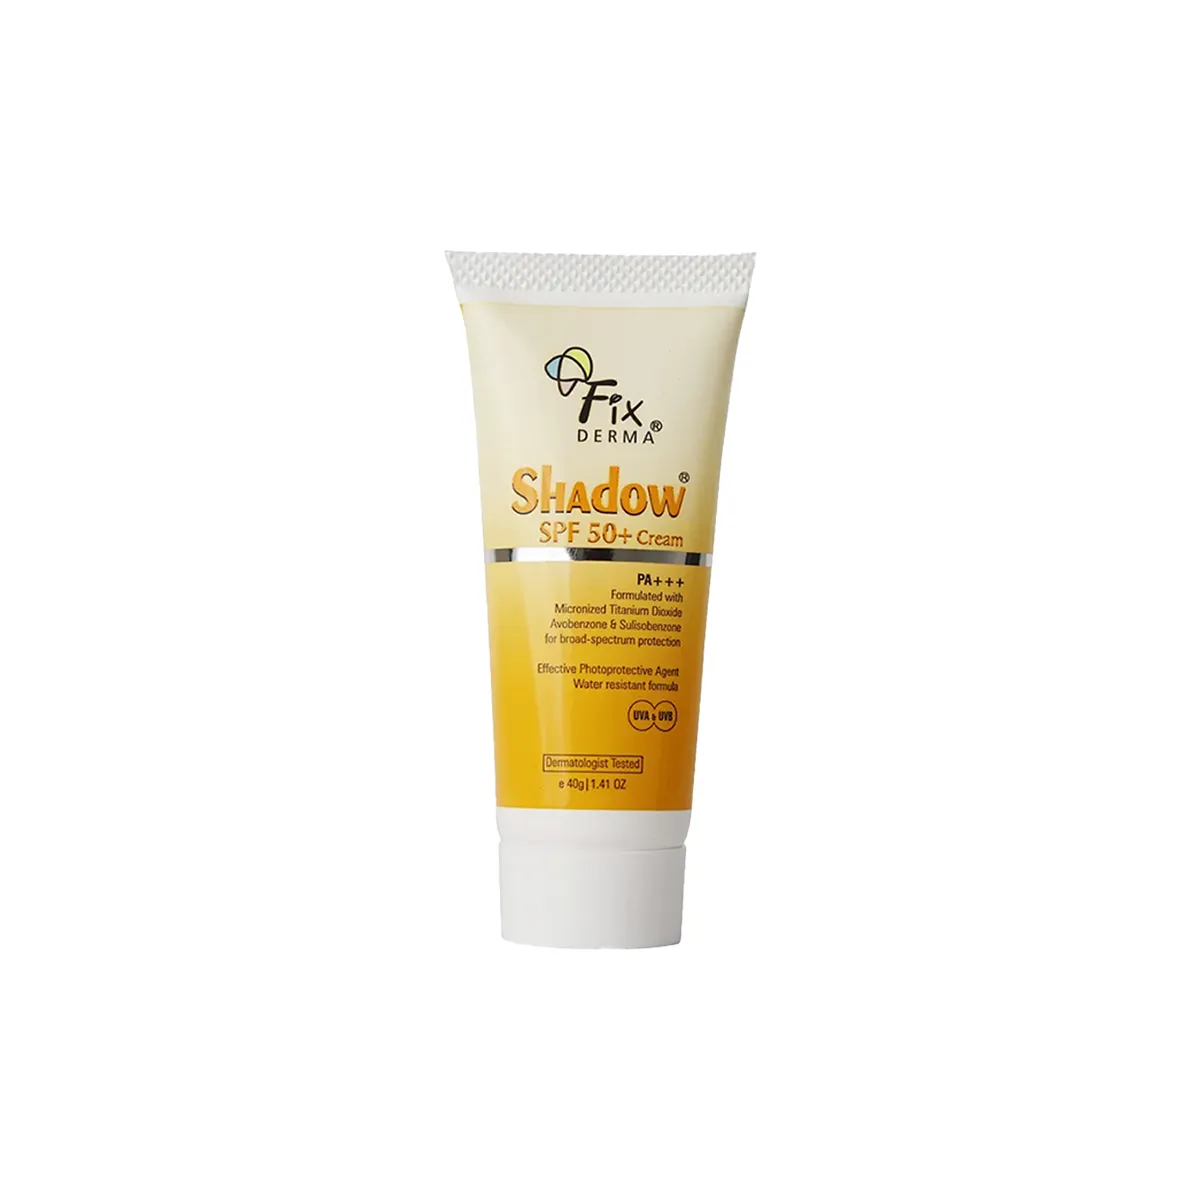 Fixderma Shadow Sunscreen Cream Spf 50 40g